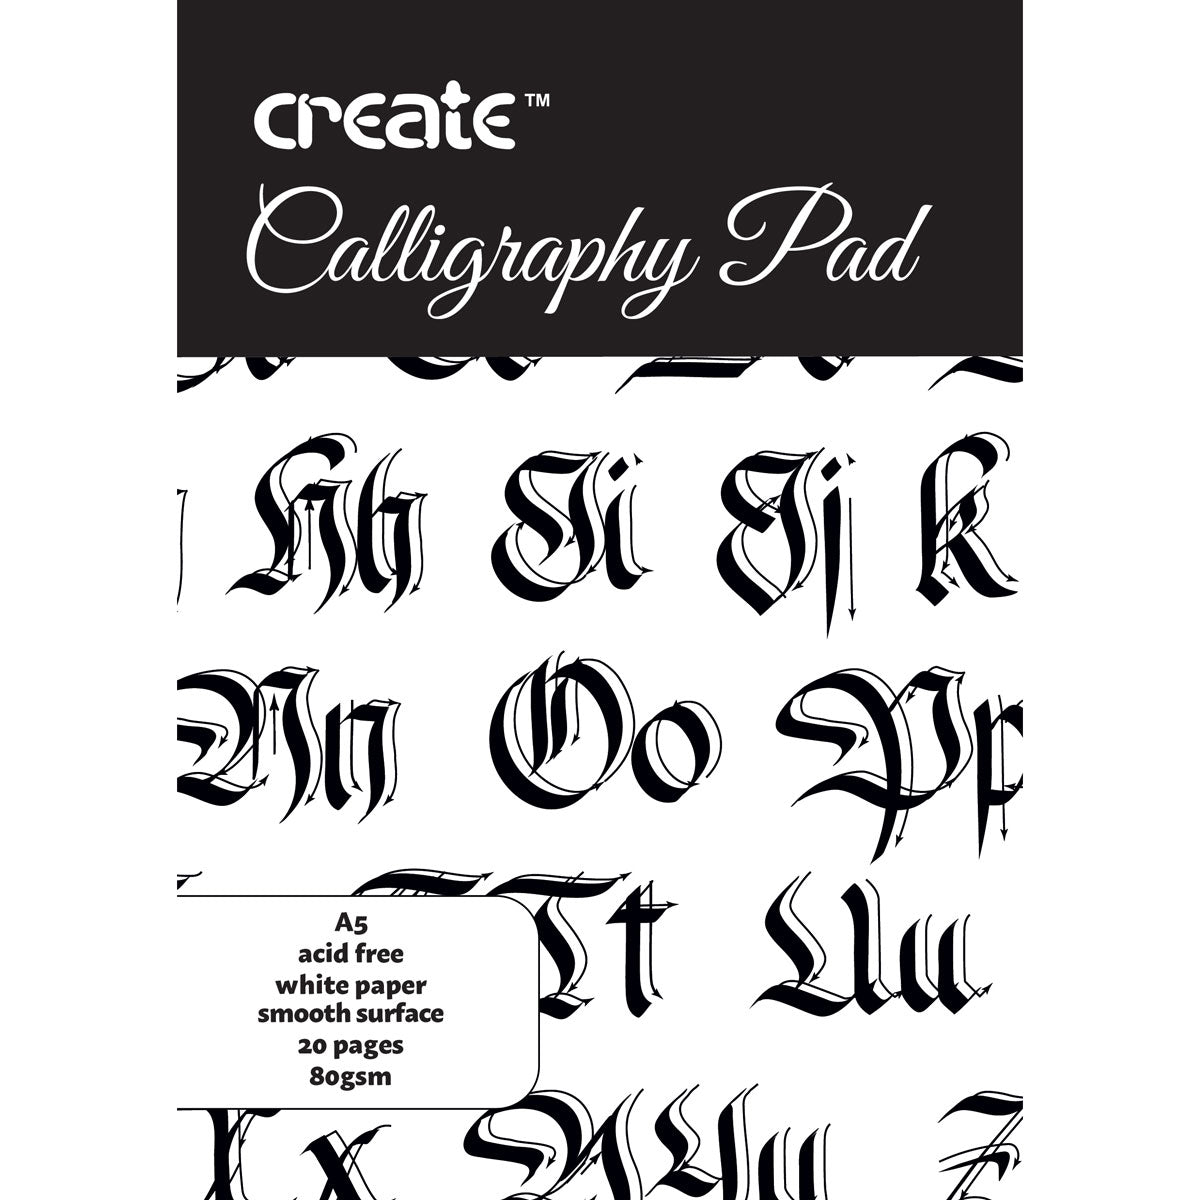 Create - Set di penne calligrafiche 25 pezzi